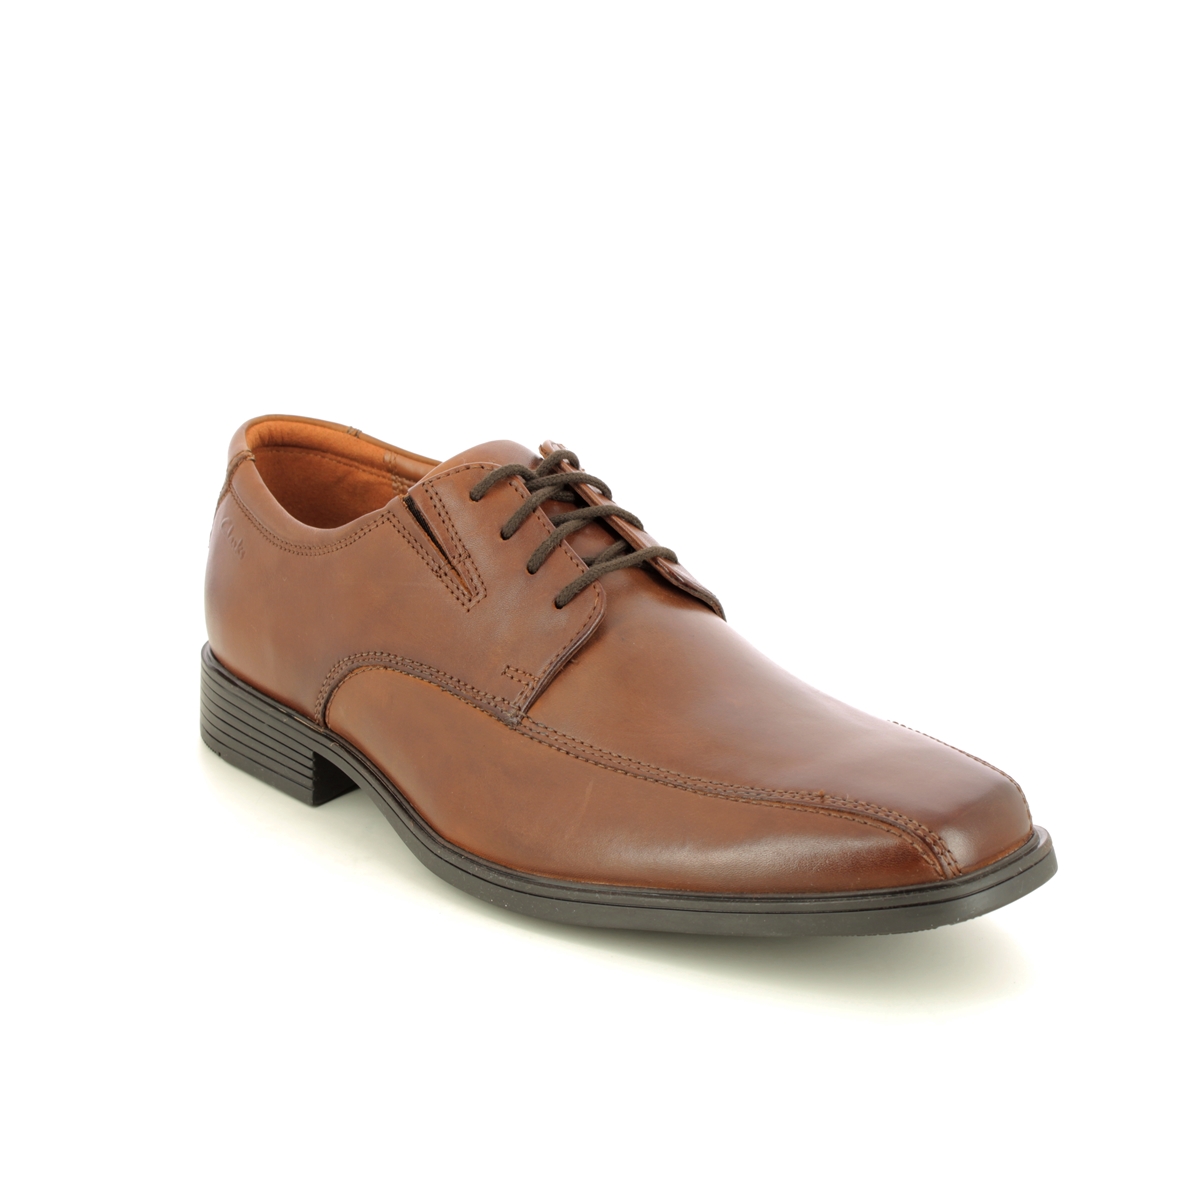 Clarks Tilden Walk Dark Tan Mens formal shoes 3009-57G in a Plain Leather in Size 9.5